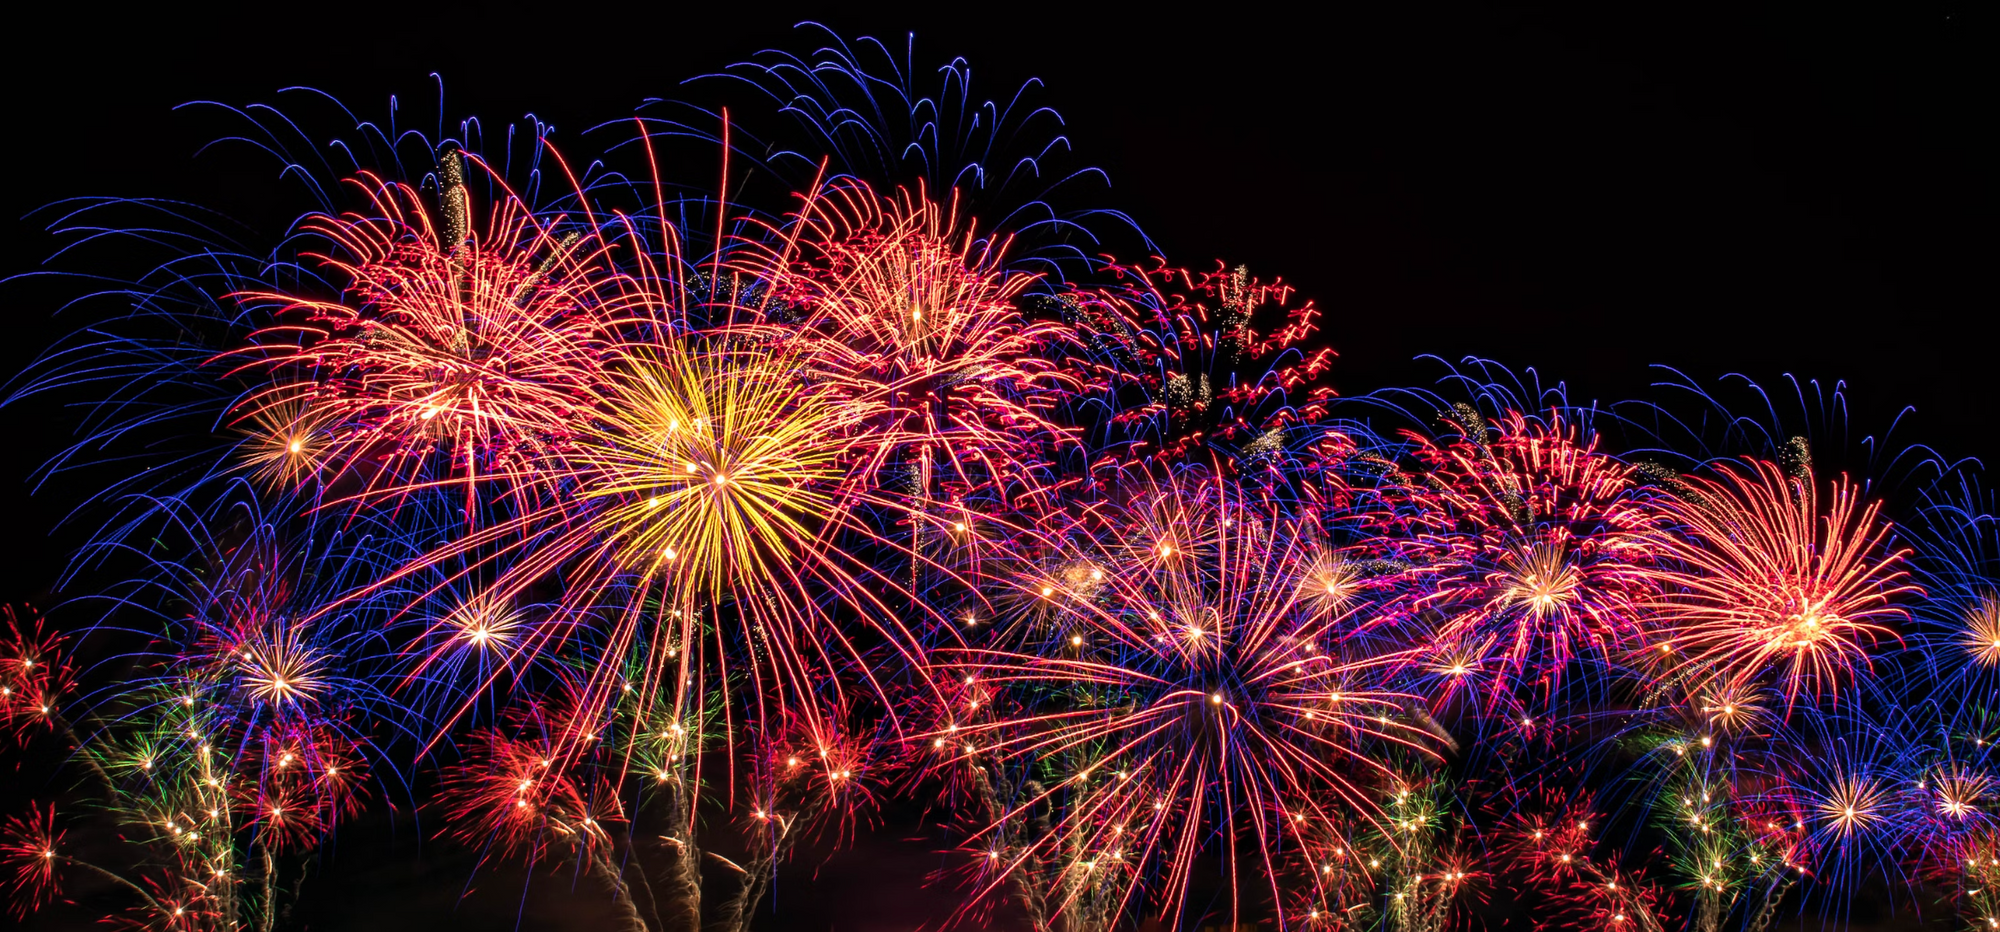 Photo of fireworks across the United Kingdom